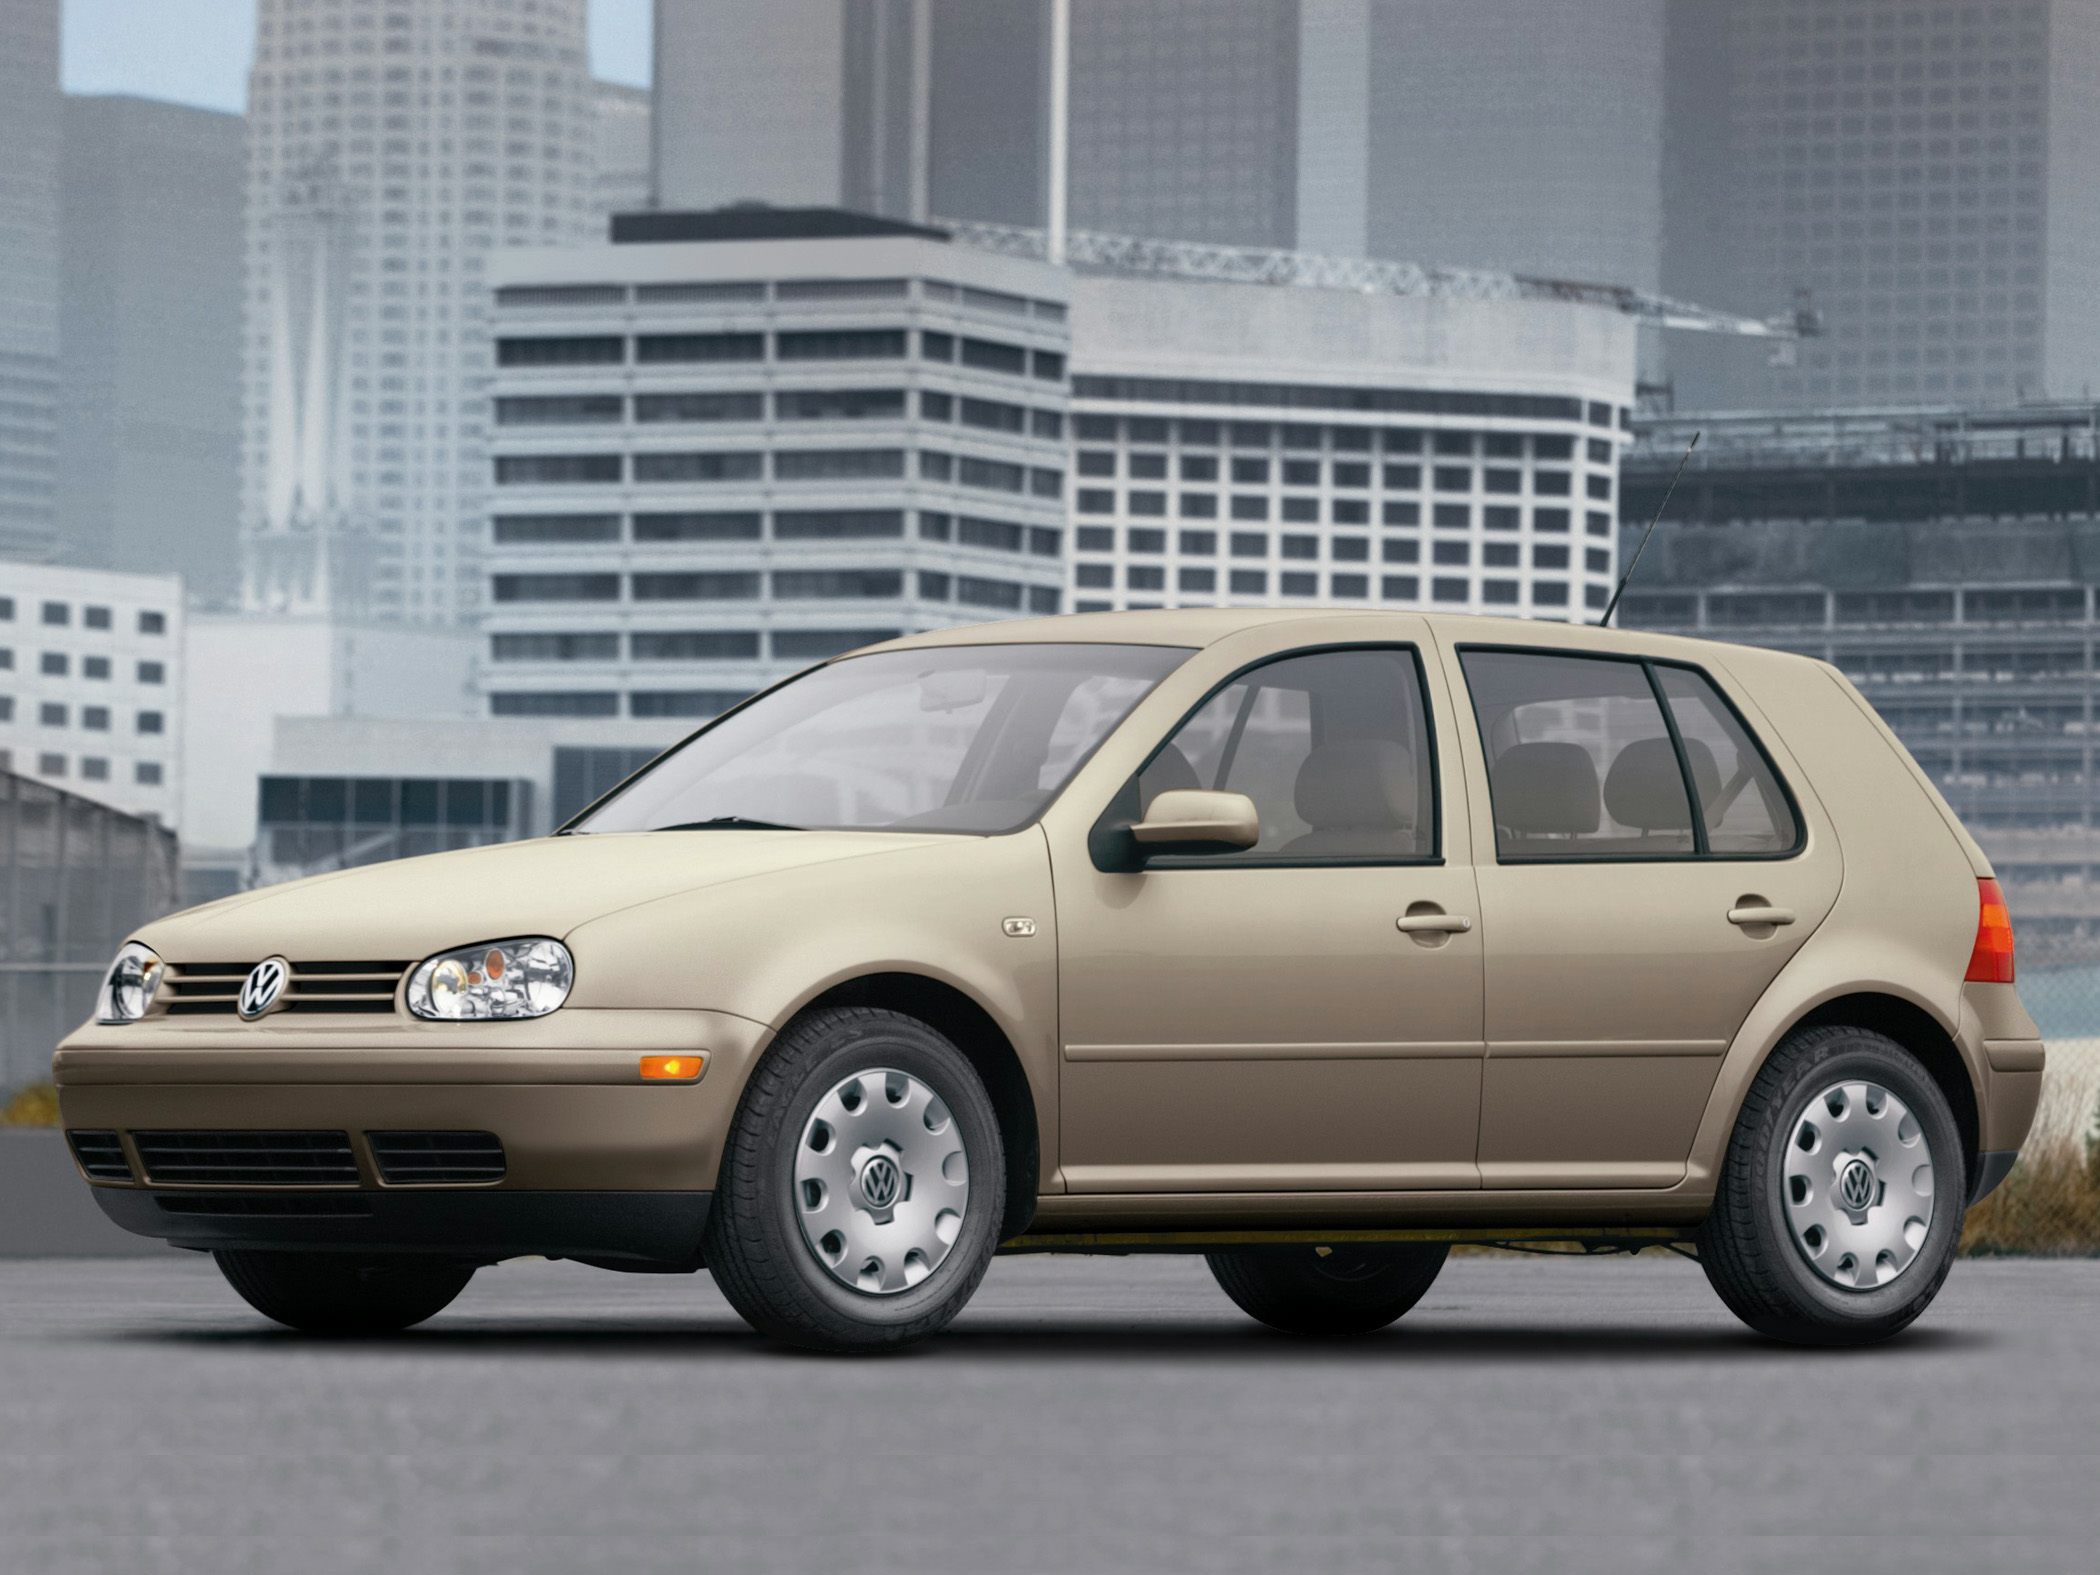 Volkswagen Golf IV — описание модели фото